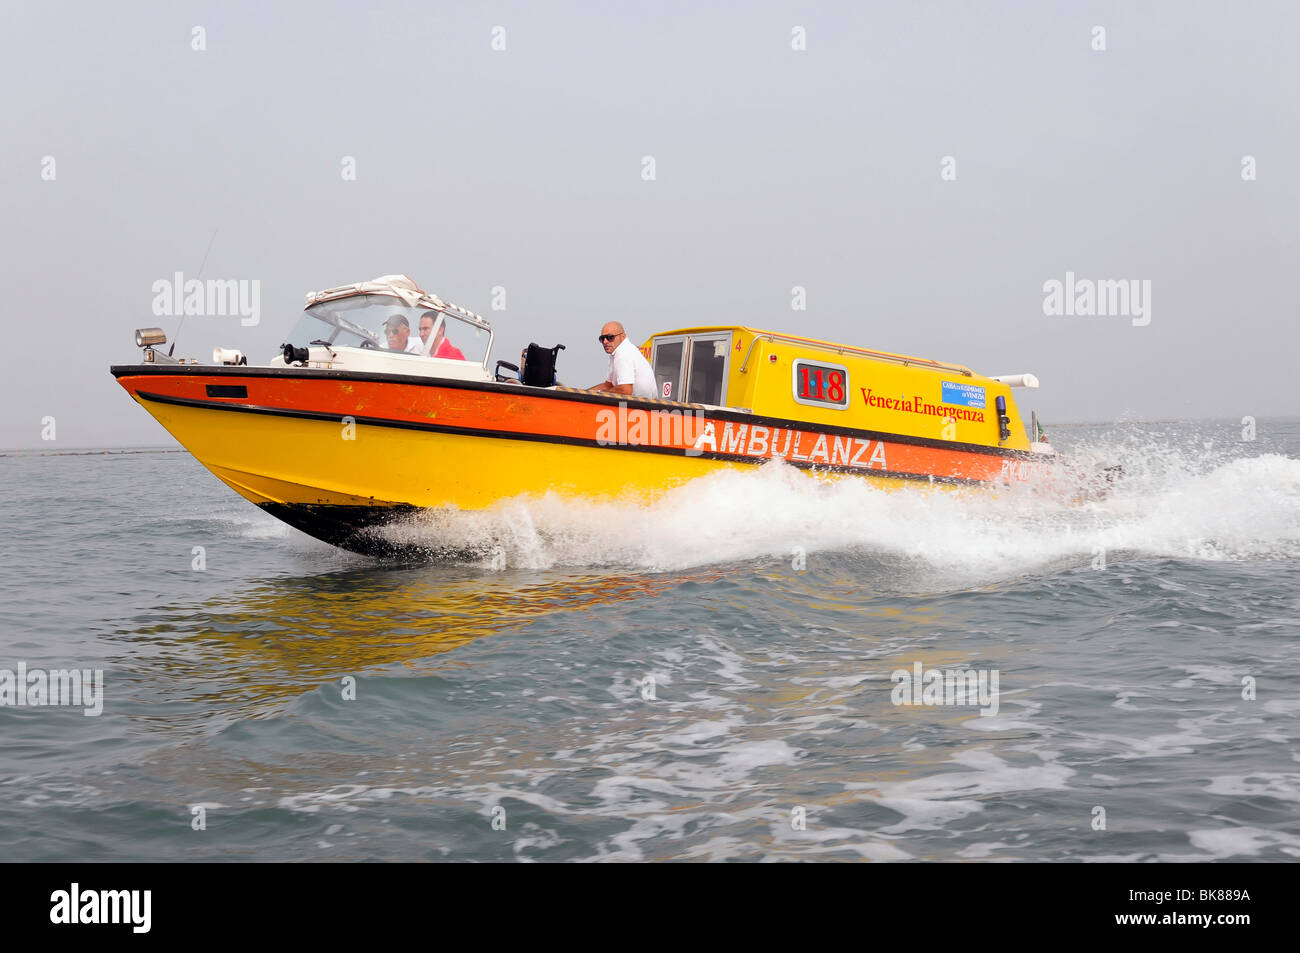 Ambulanza, Venezia Emergenza, nave para emergencias médicas, Venecia, Véneto, Italia, Europa Foto de stock